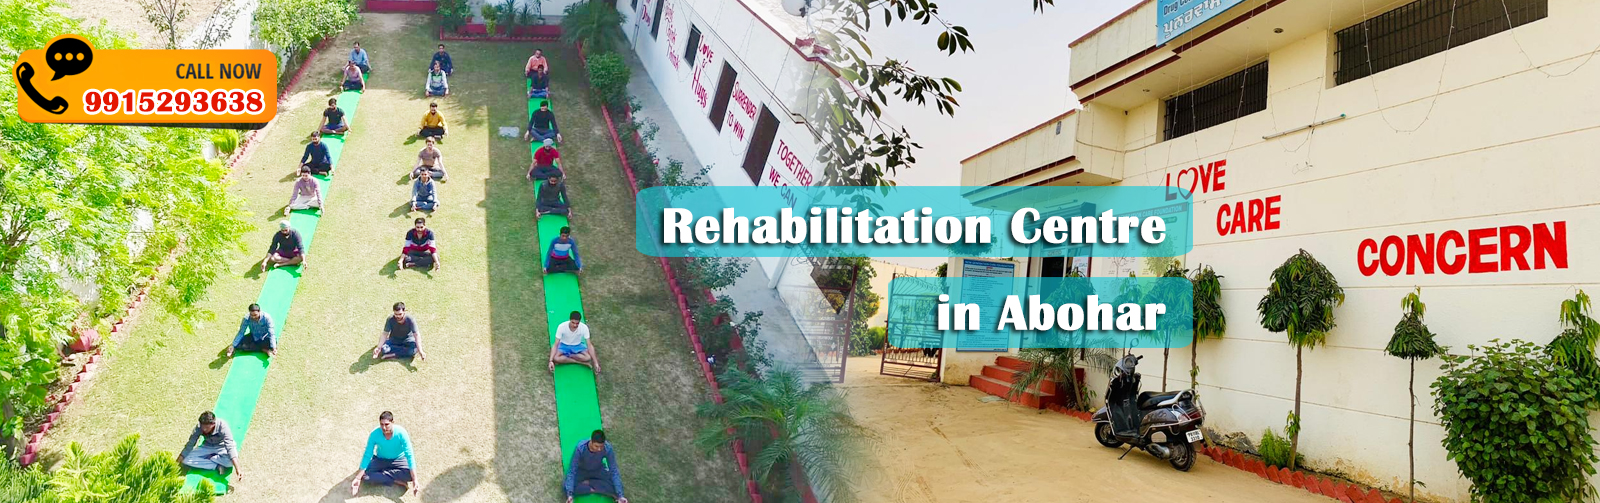 Rehabilitation Centre in Abohar